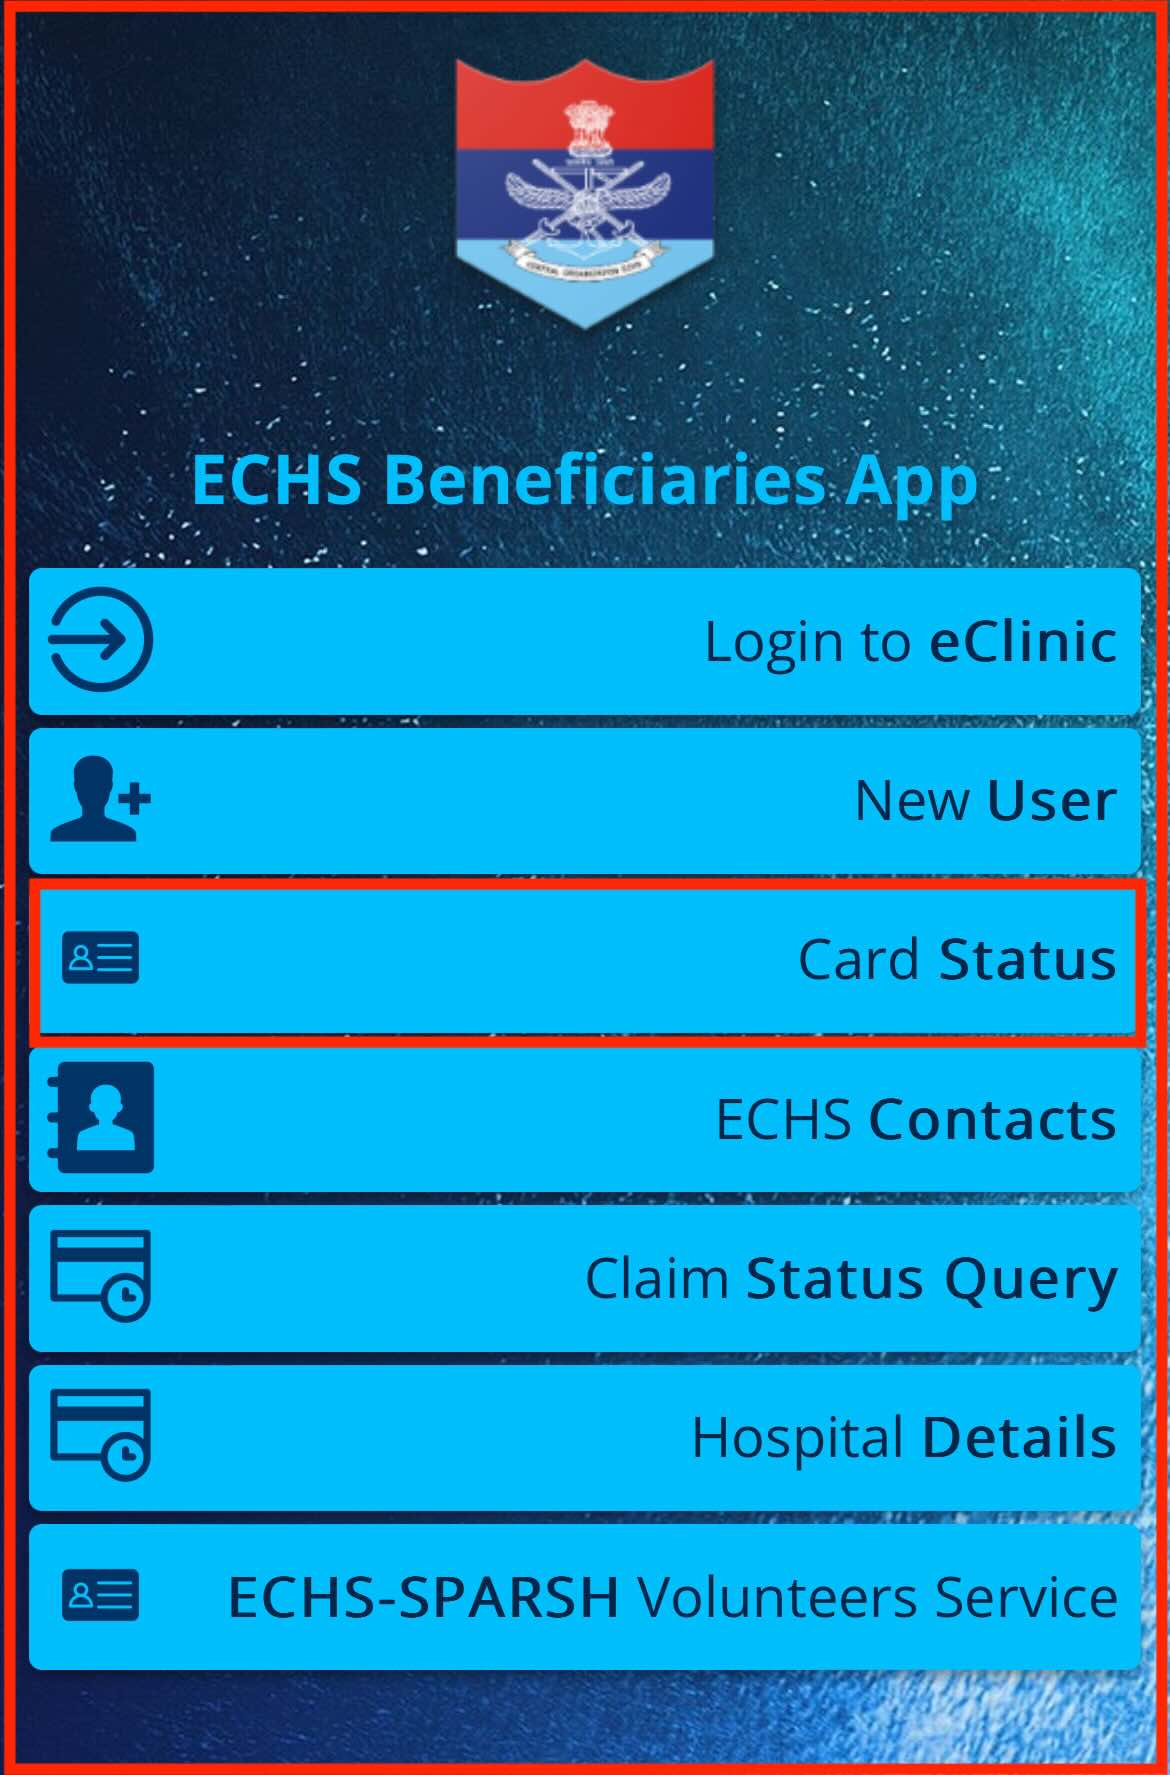 ECHS 64KB Card Status online